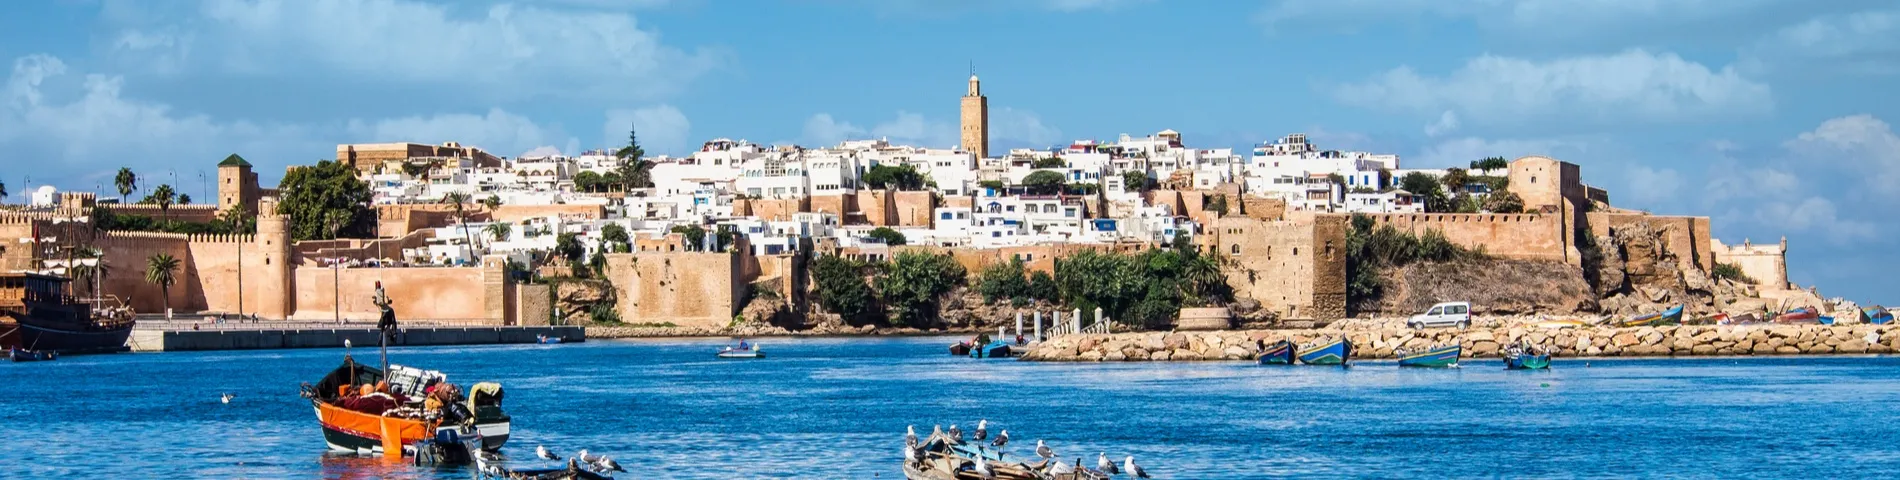 Rabat - Standardowy